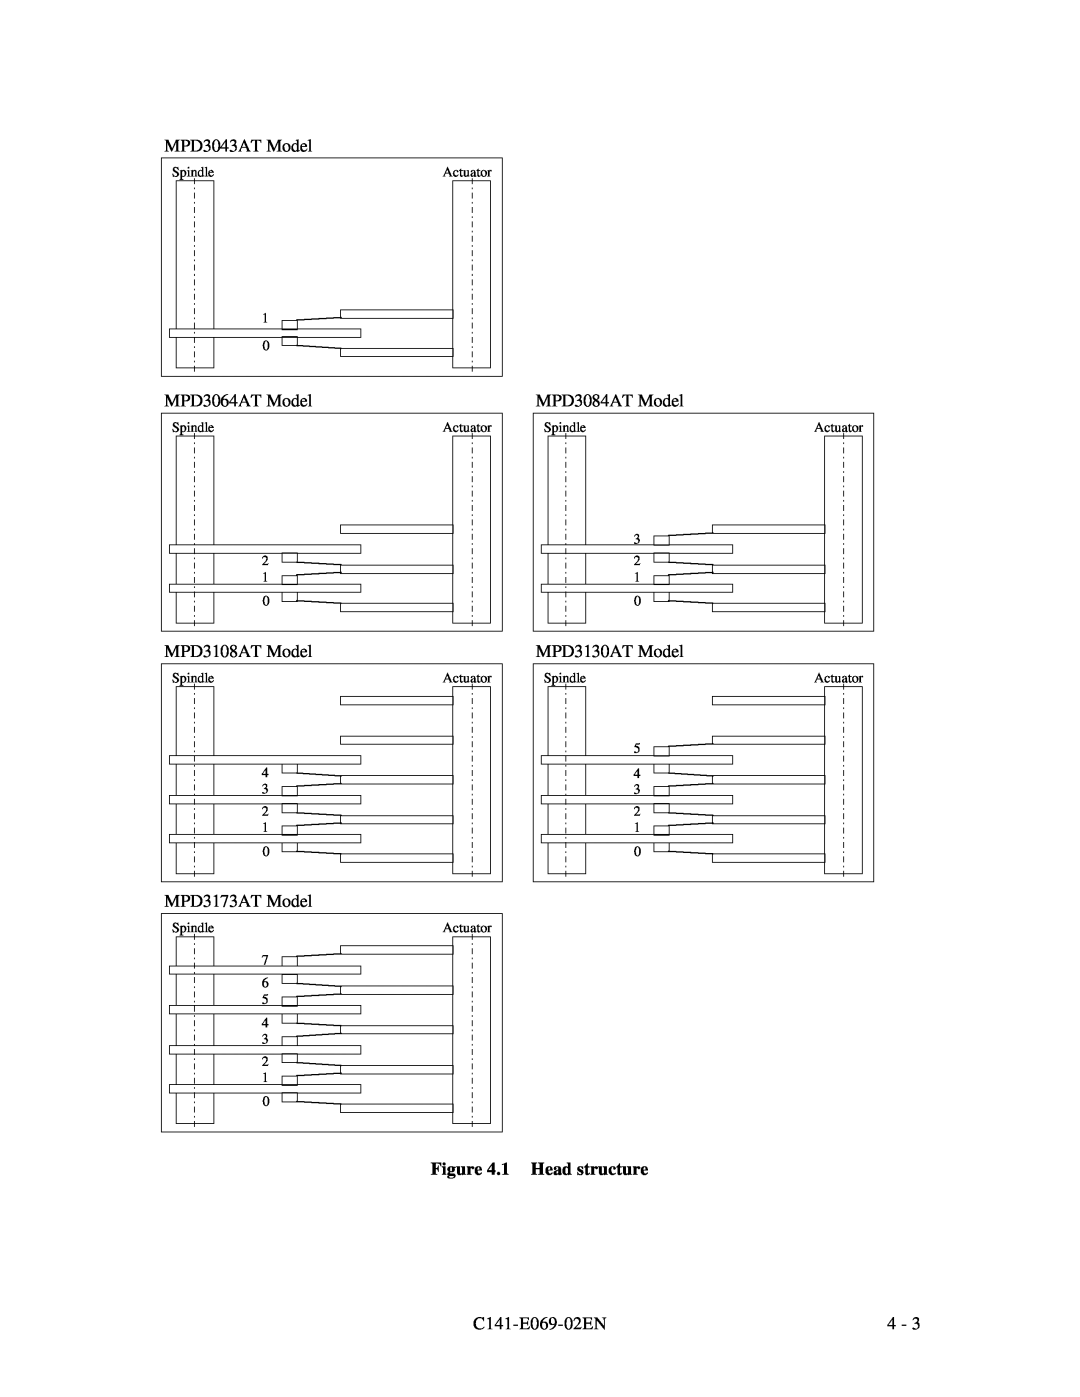 Fujitsu MPD3XXXAT 1 Head structure, MPD3043AT Model, MPD3064AT Model, MPD3108AT Model, MPD3173AT Model, MPD3084AT Model 